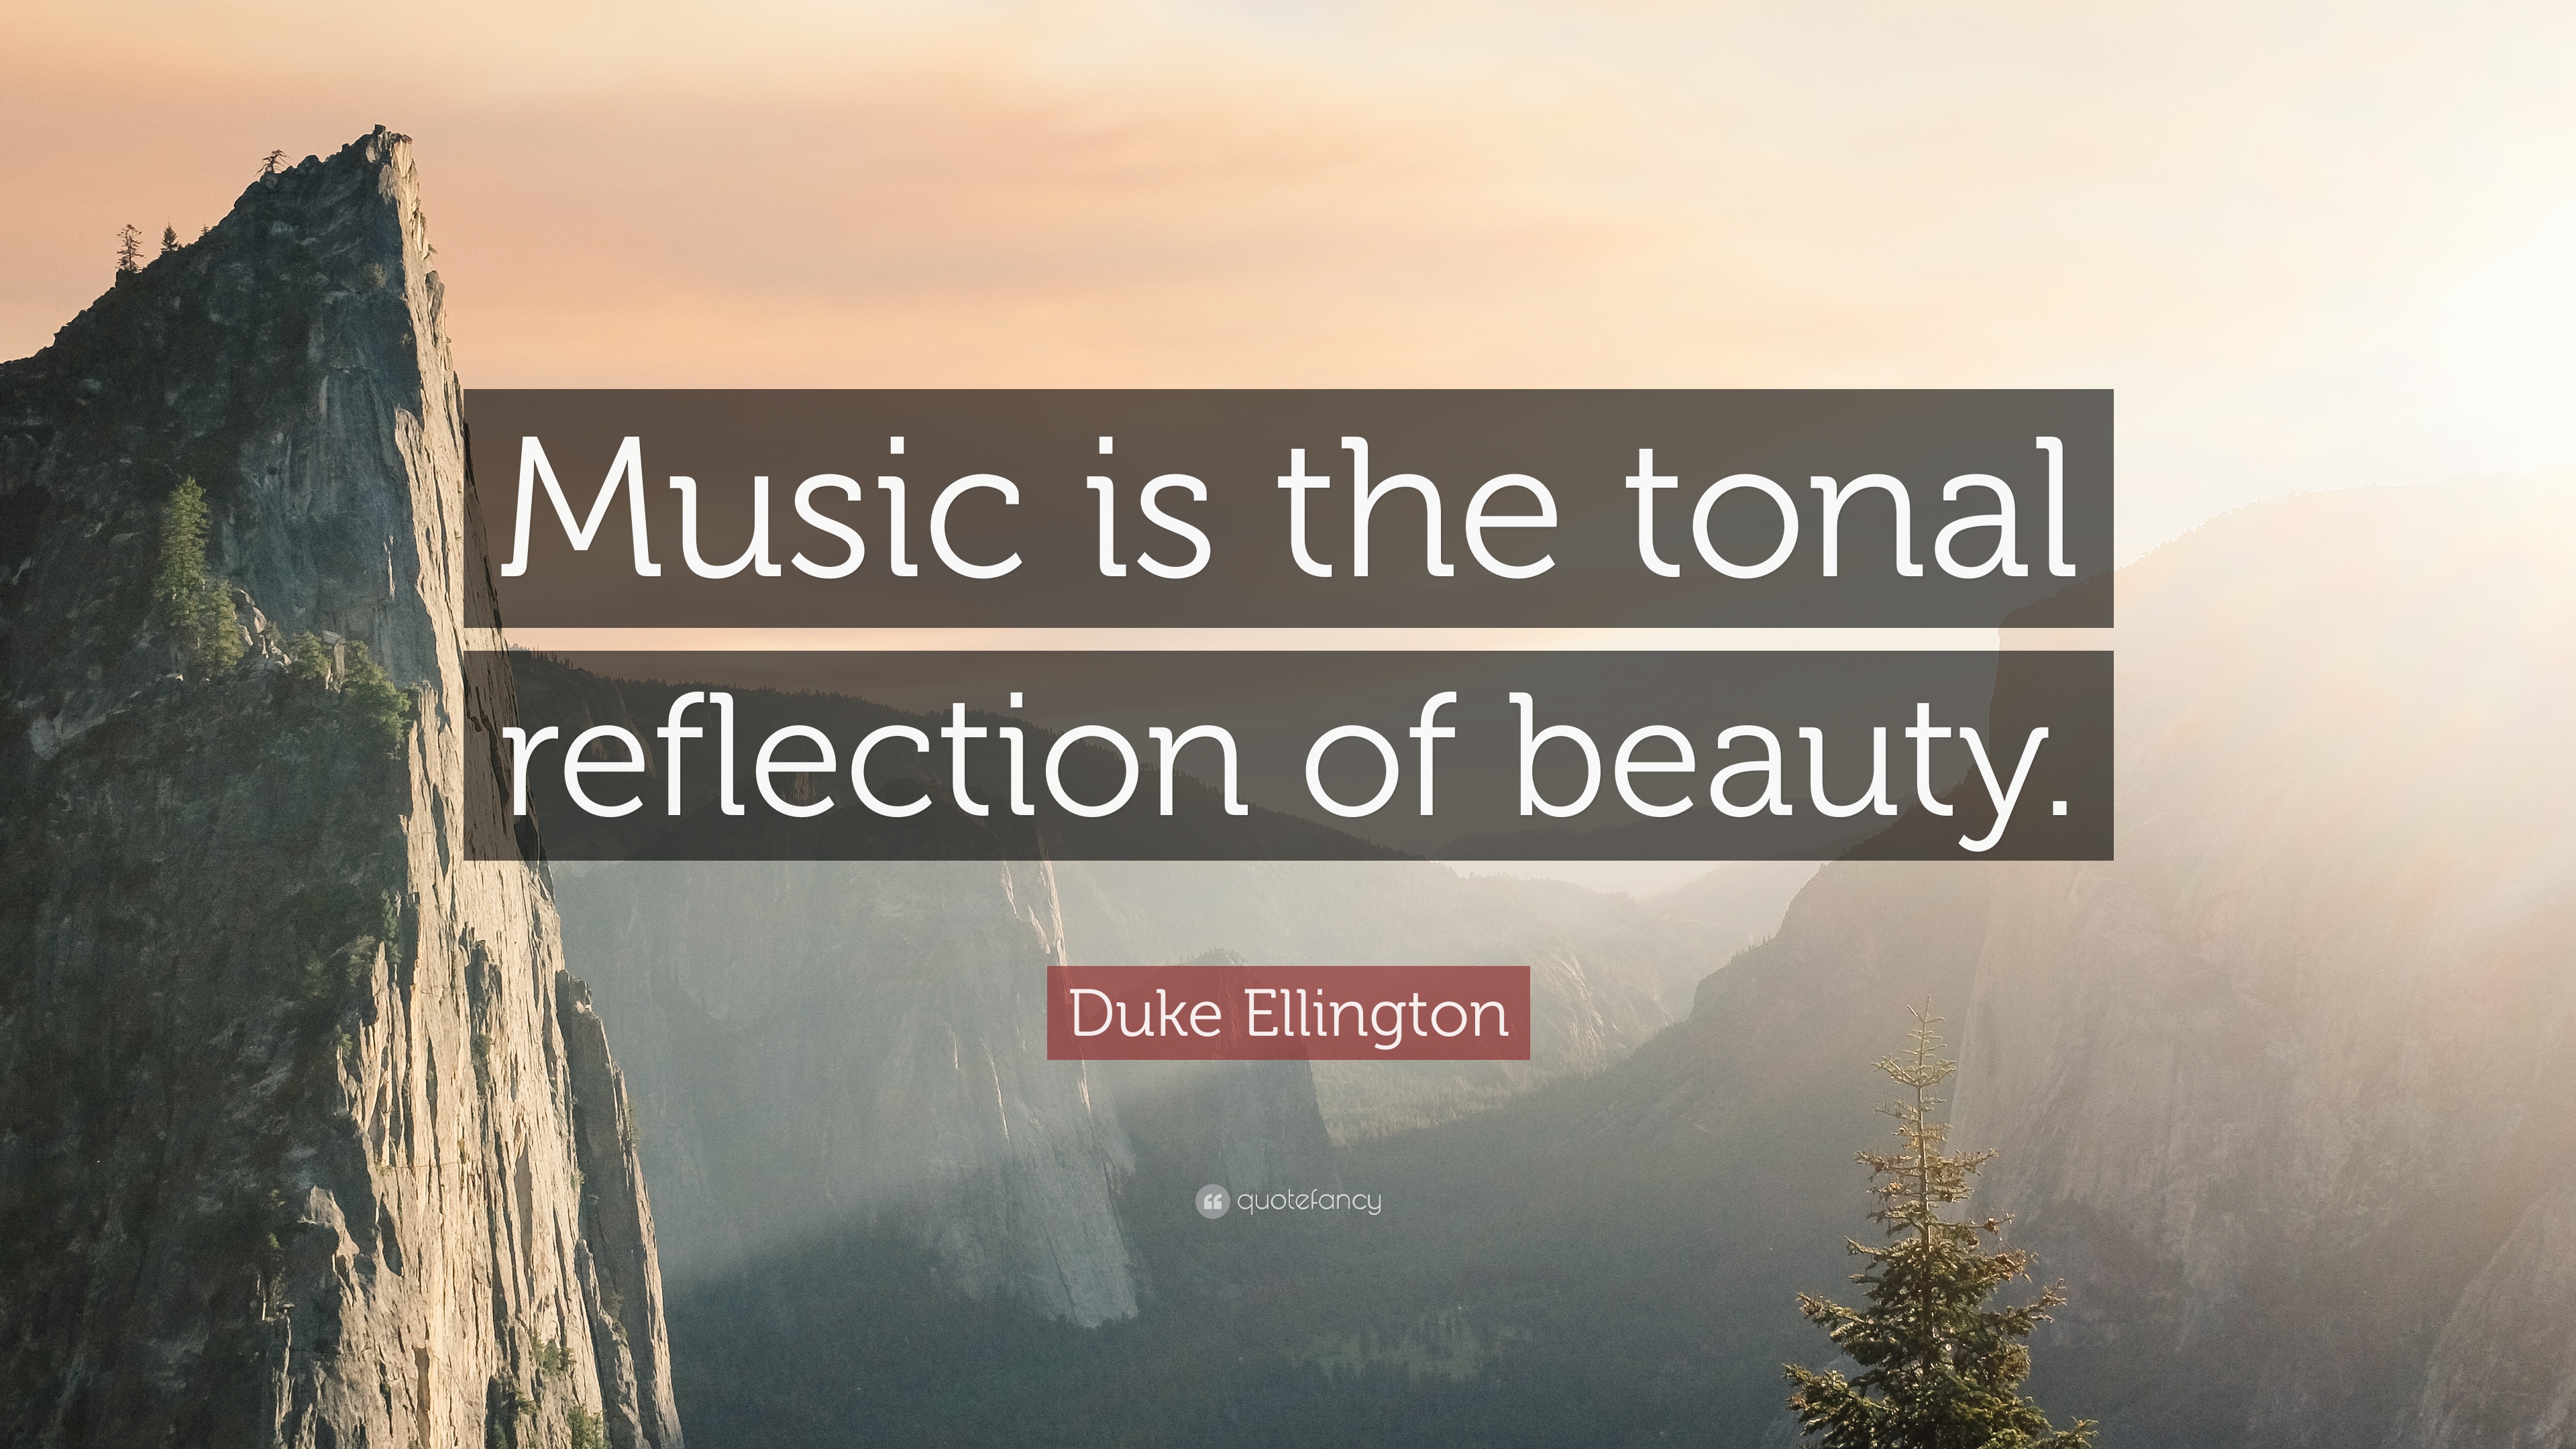 Duke Ellington Quote: “Music is the tonal reflection